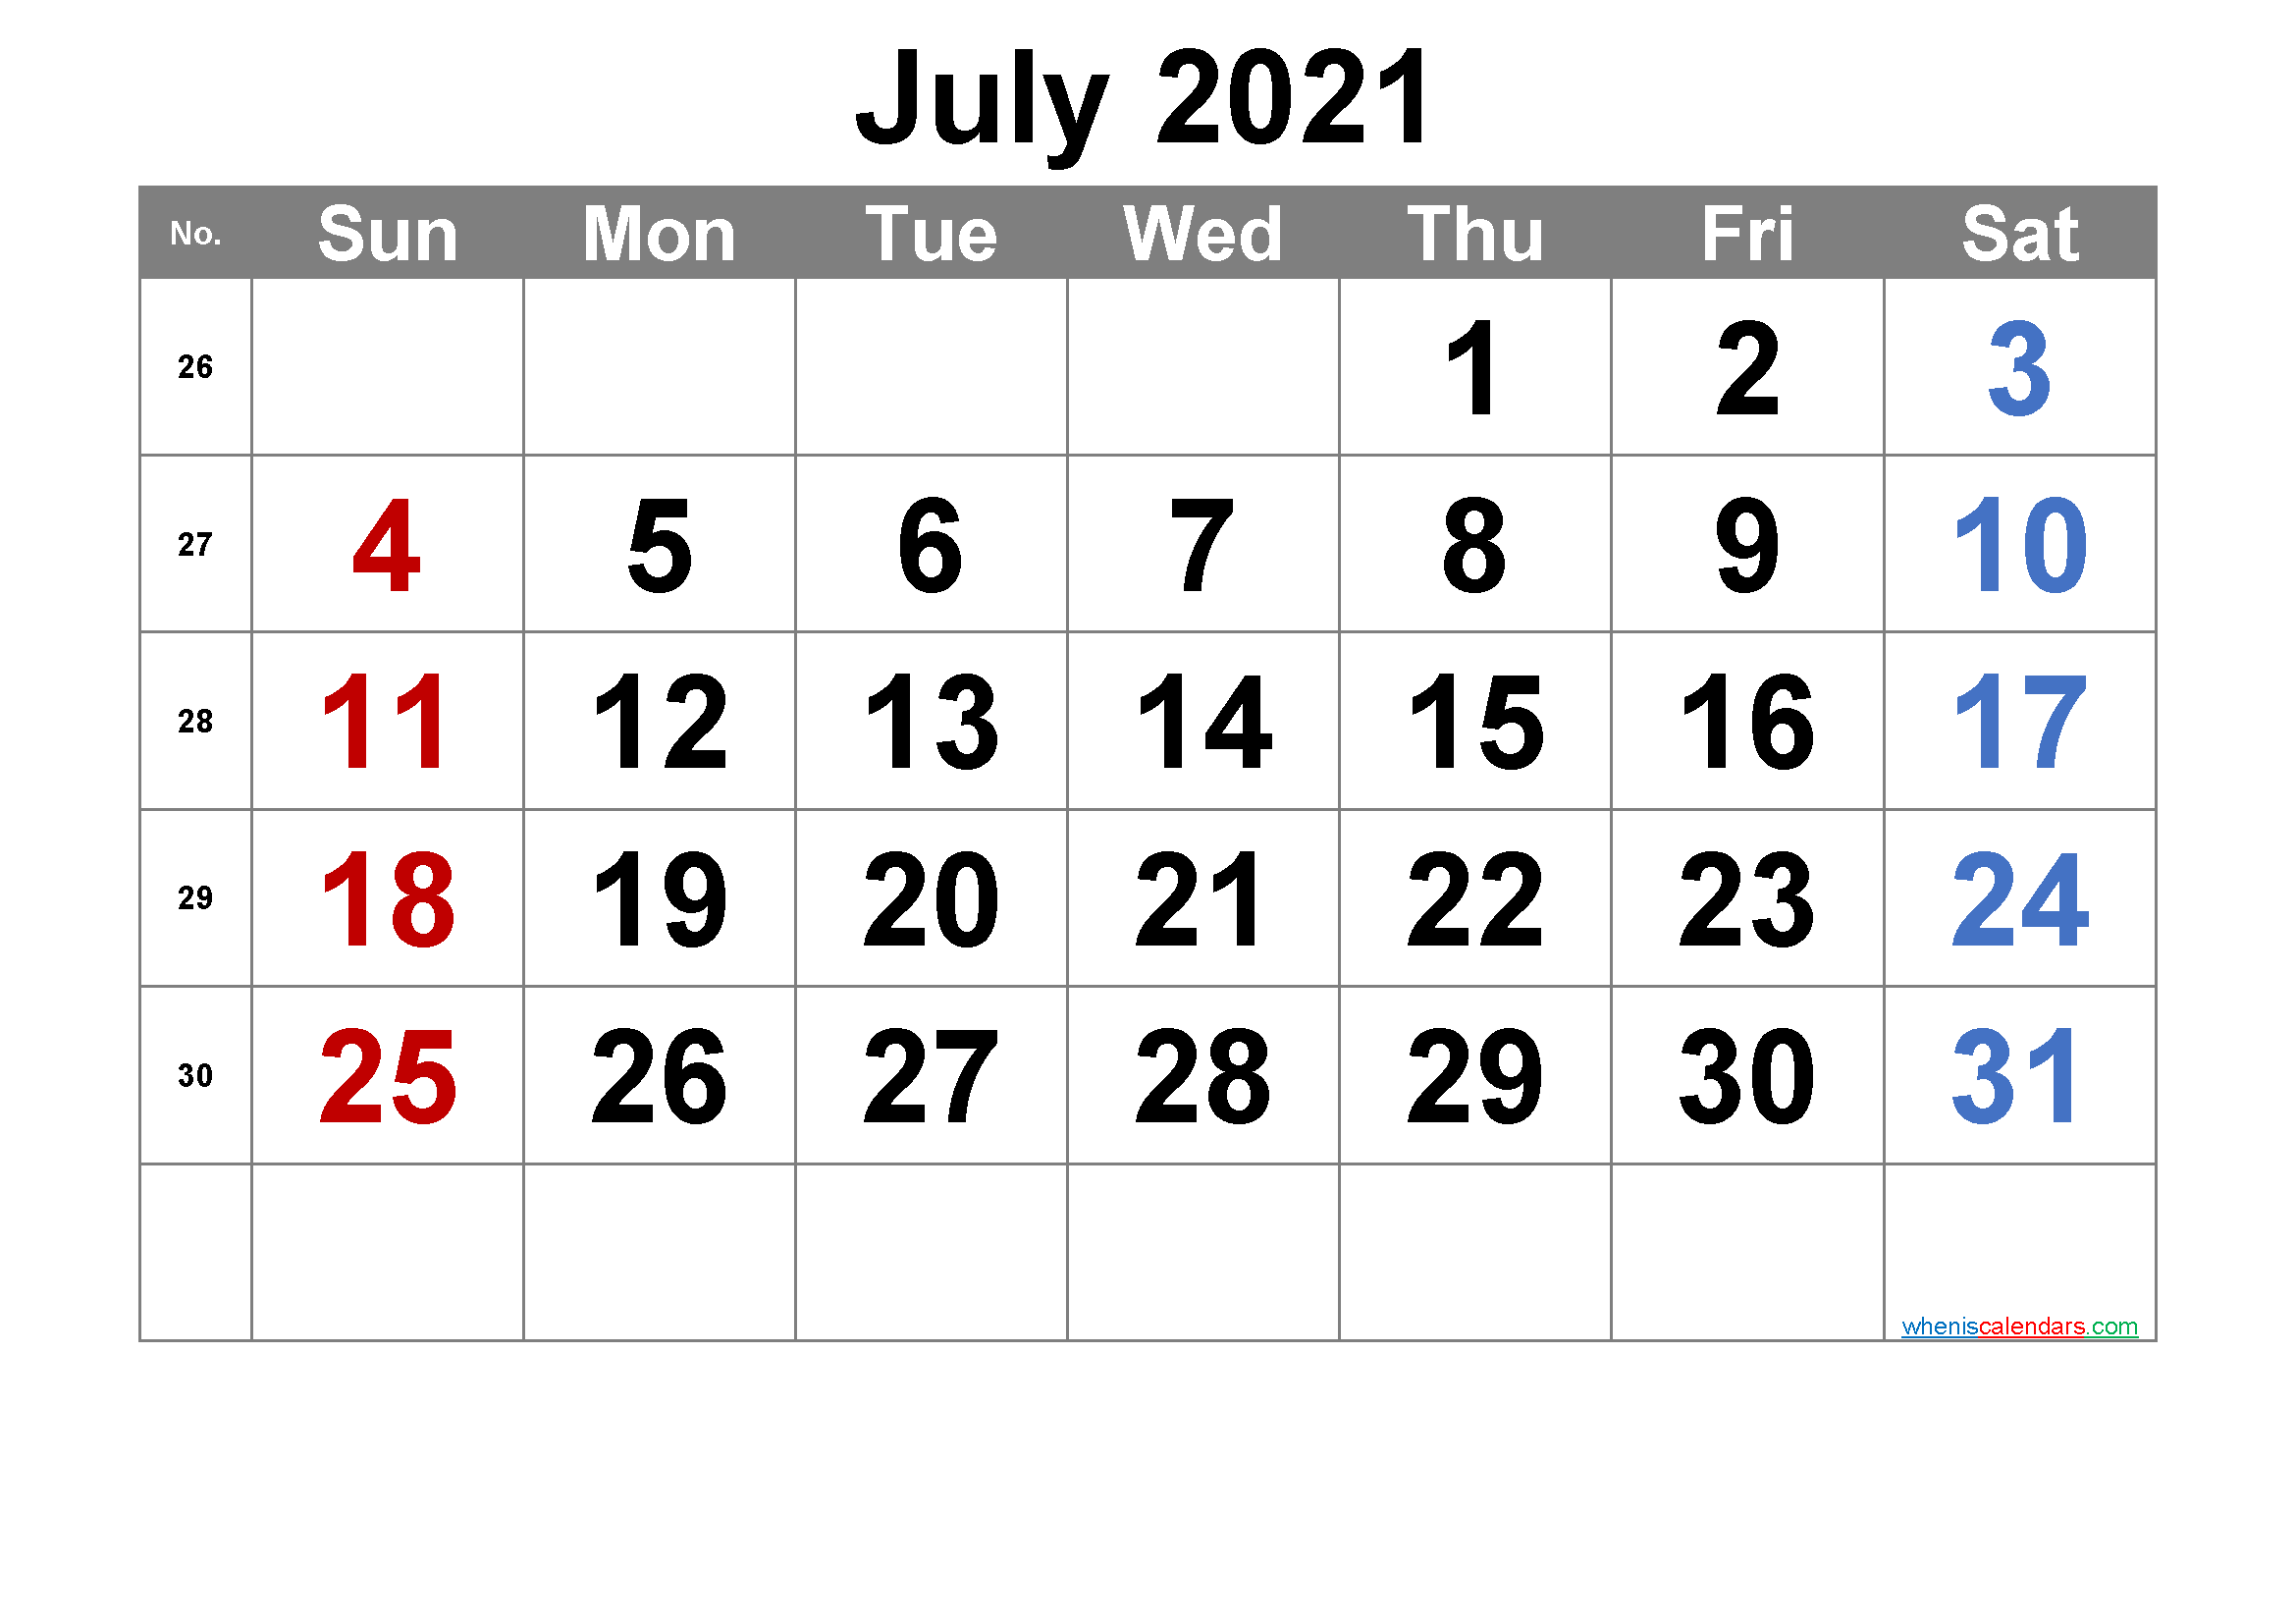 July June Calendar 2021 - June 2021 - calendar templates for Word